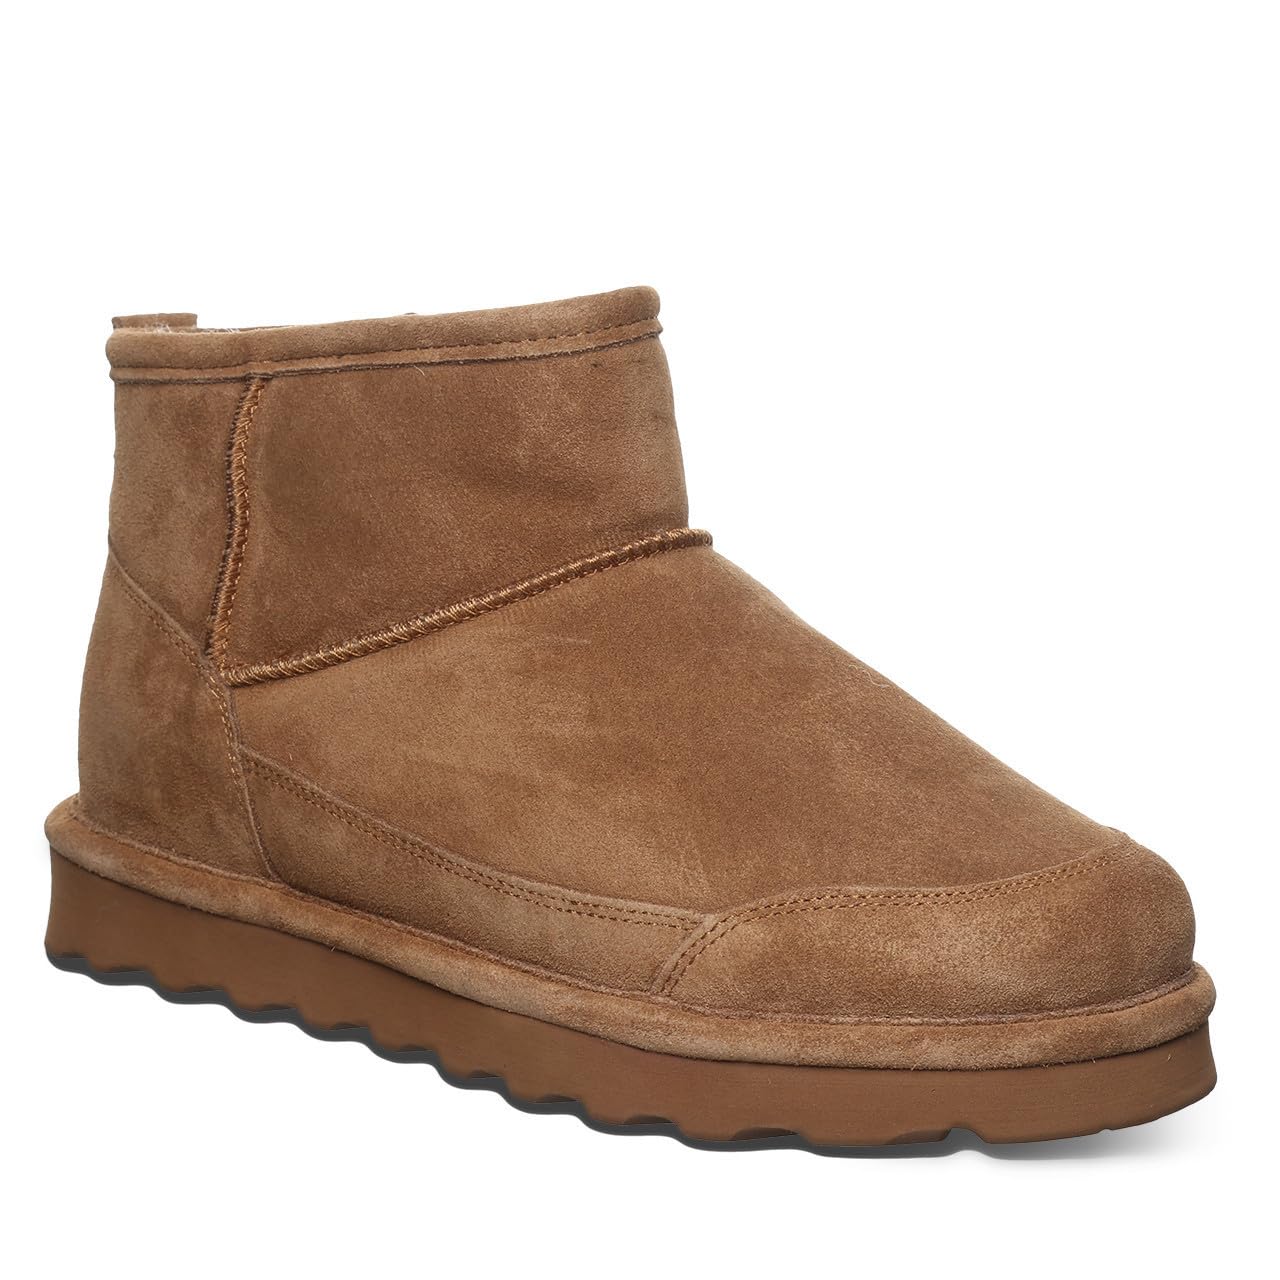 BEARPAW Men's Ace Boot Multiple Colors & Sizes | Men's Fashion Boot | Men's Slip On Boot | Comfortable Winter Boot